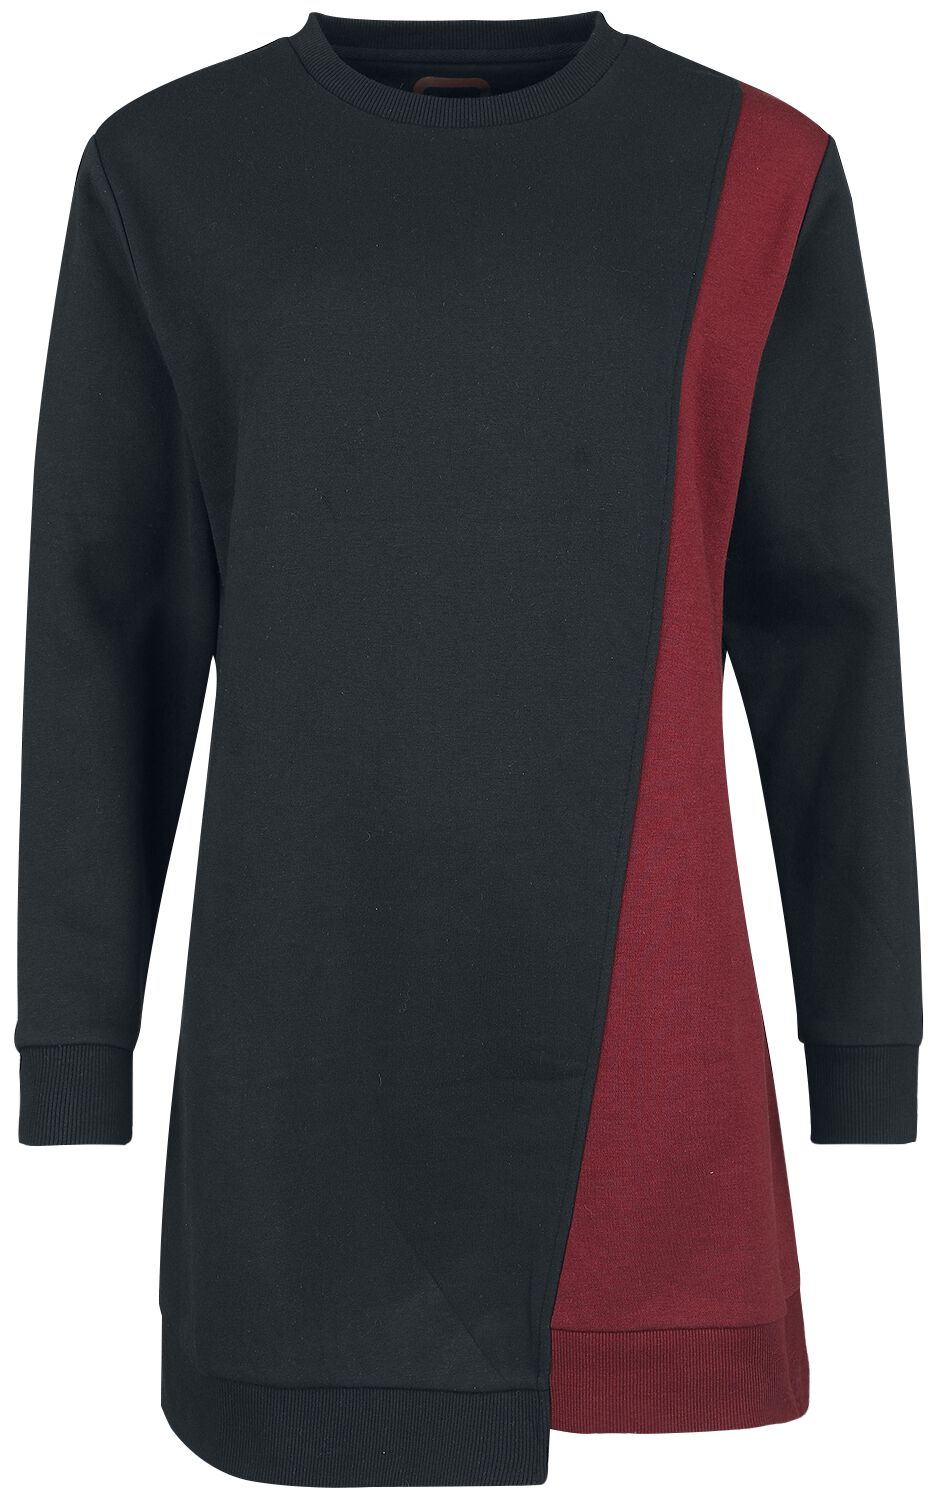 RED by EMP Sweatshirt Dress with asymmetrical Cut Kurzes Kleid schwarz dunkelrot in XXL